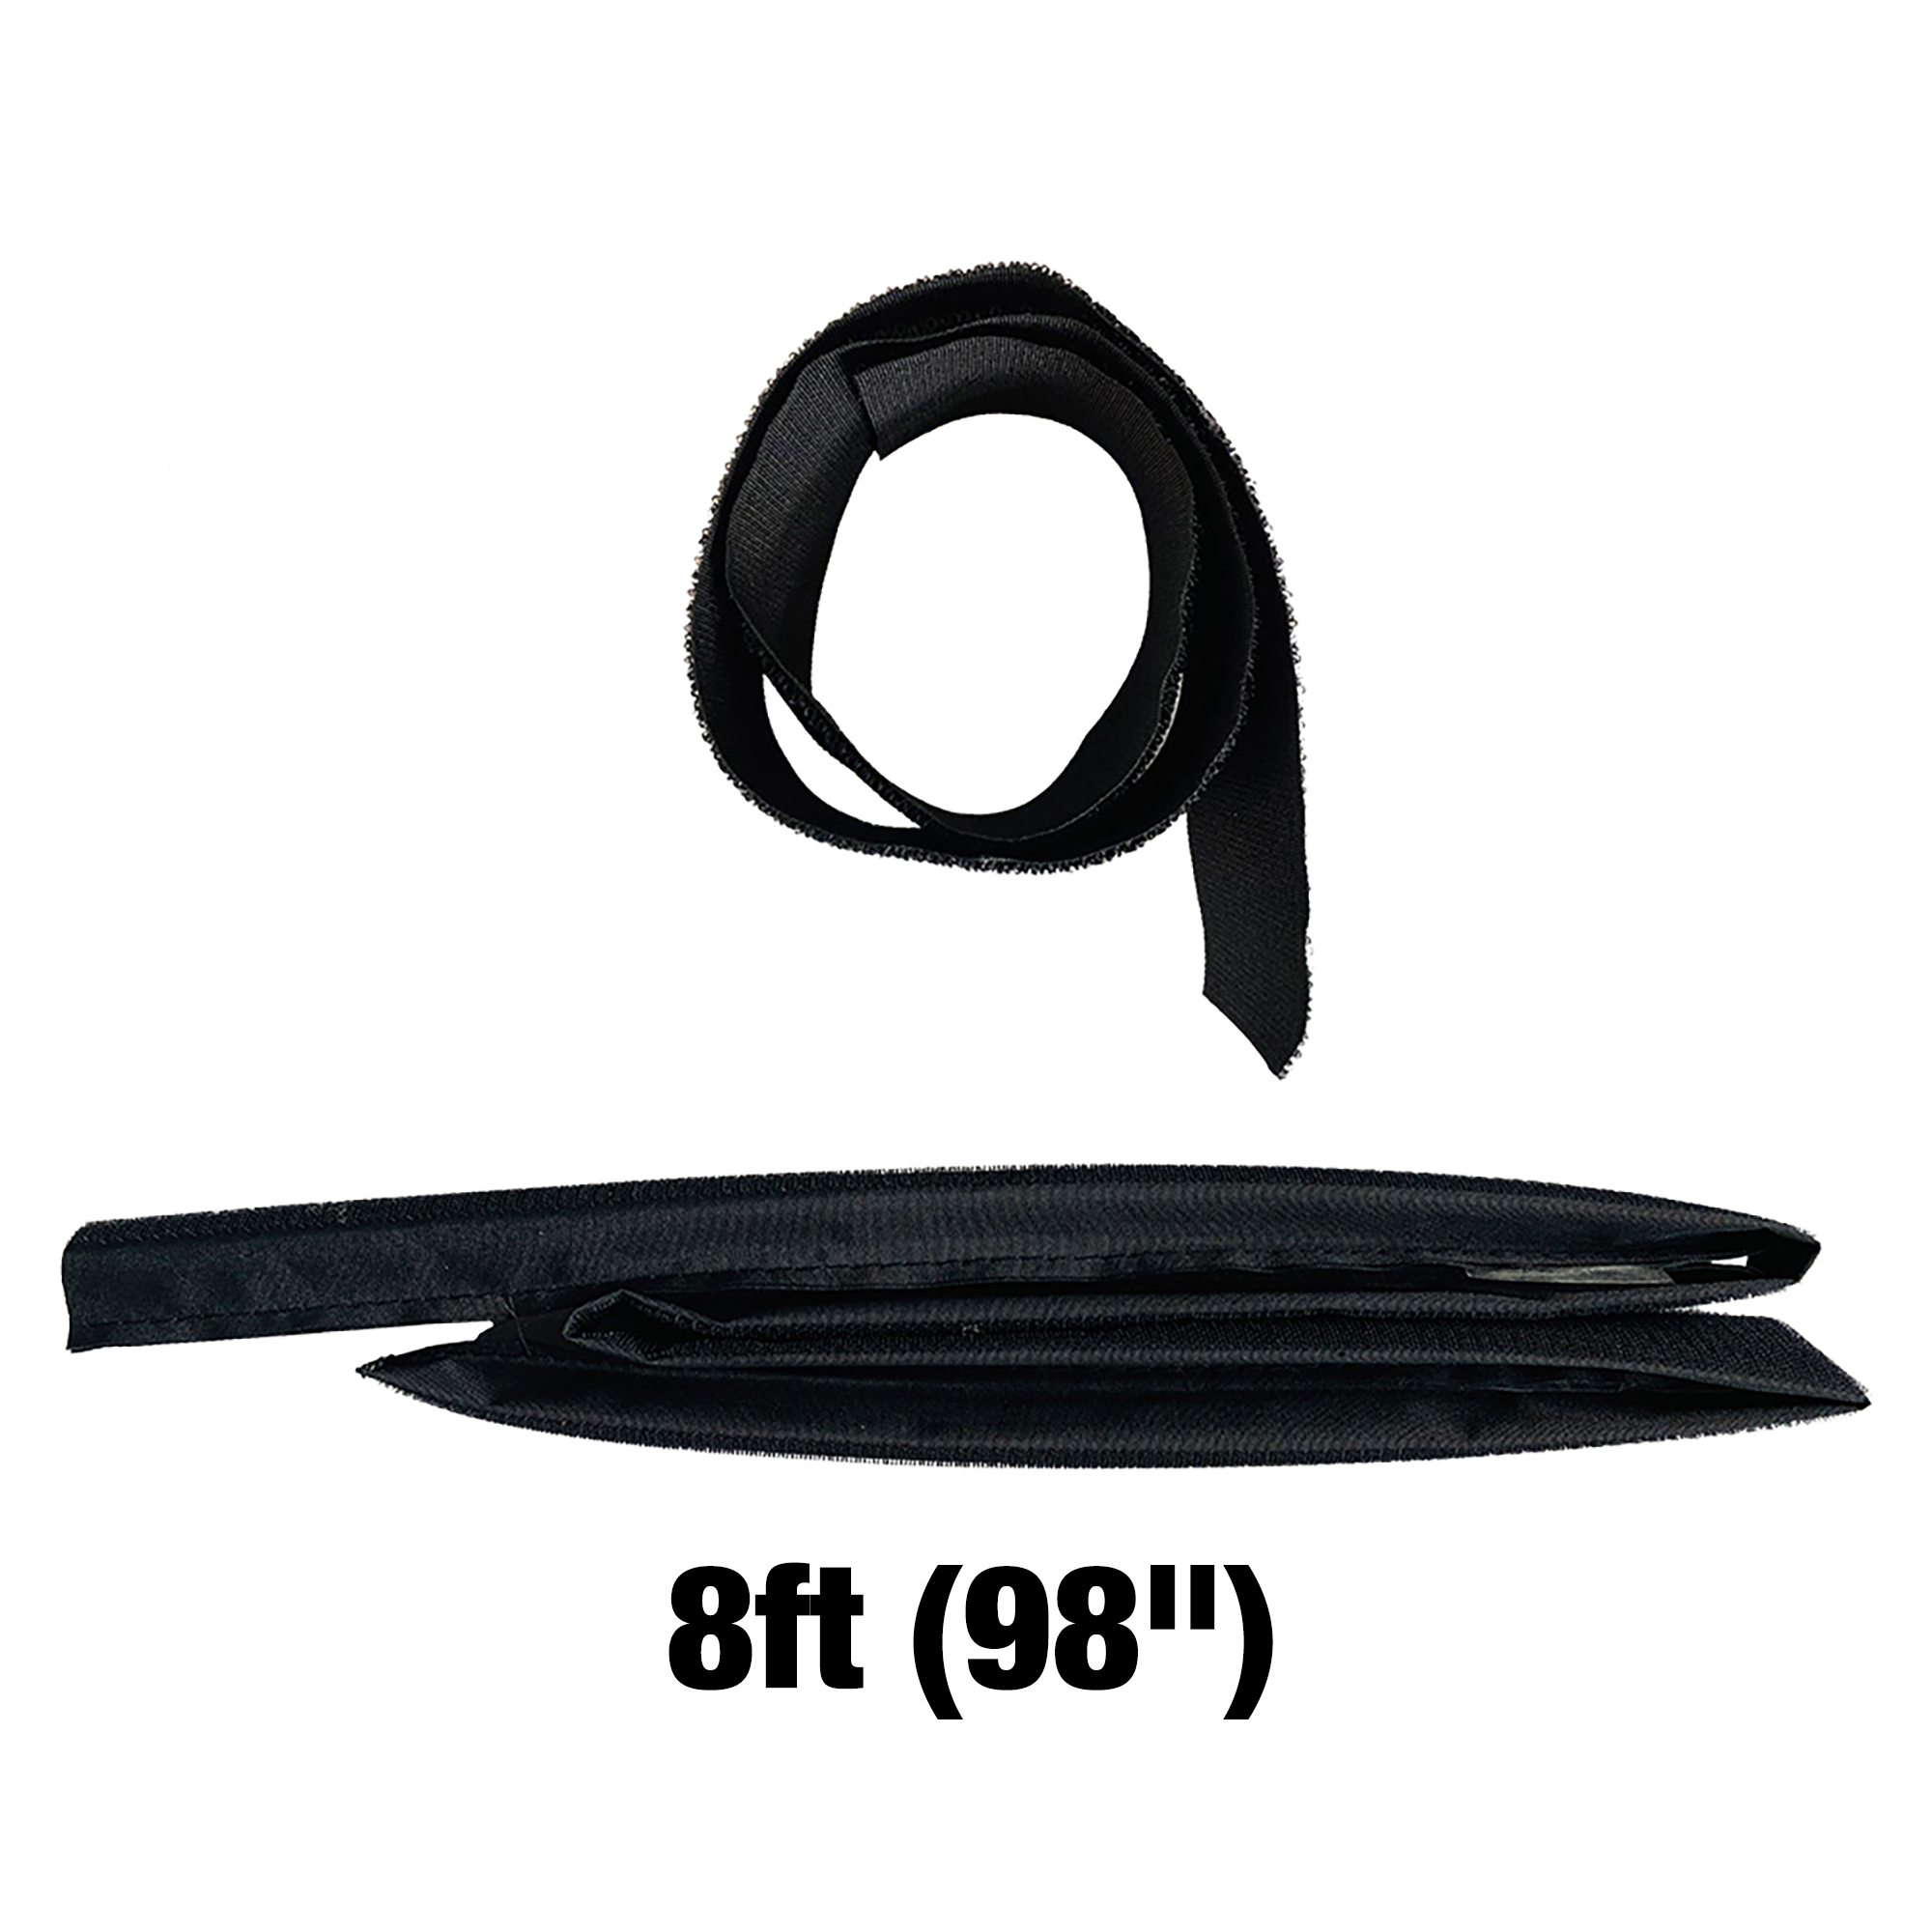 For T1 - Velcro Strip, 8ft (98in), 1 Strip